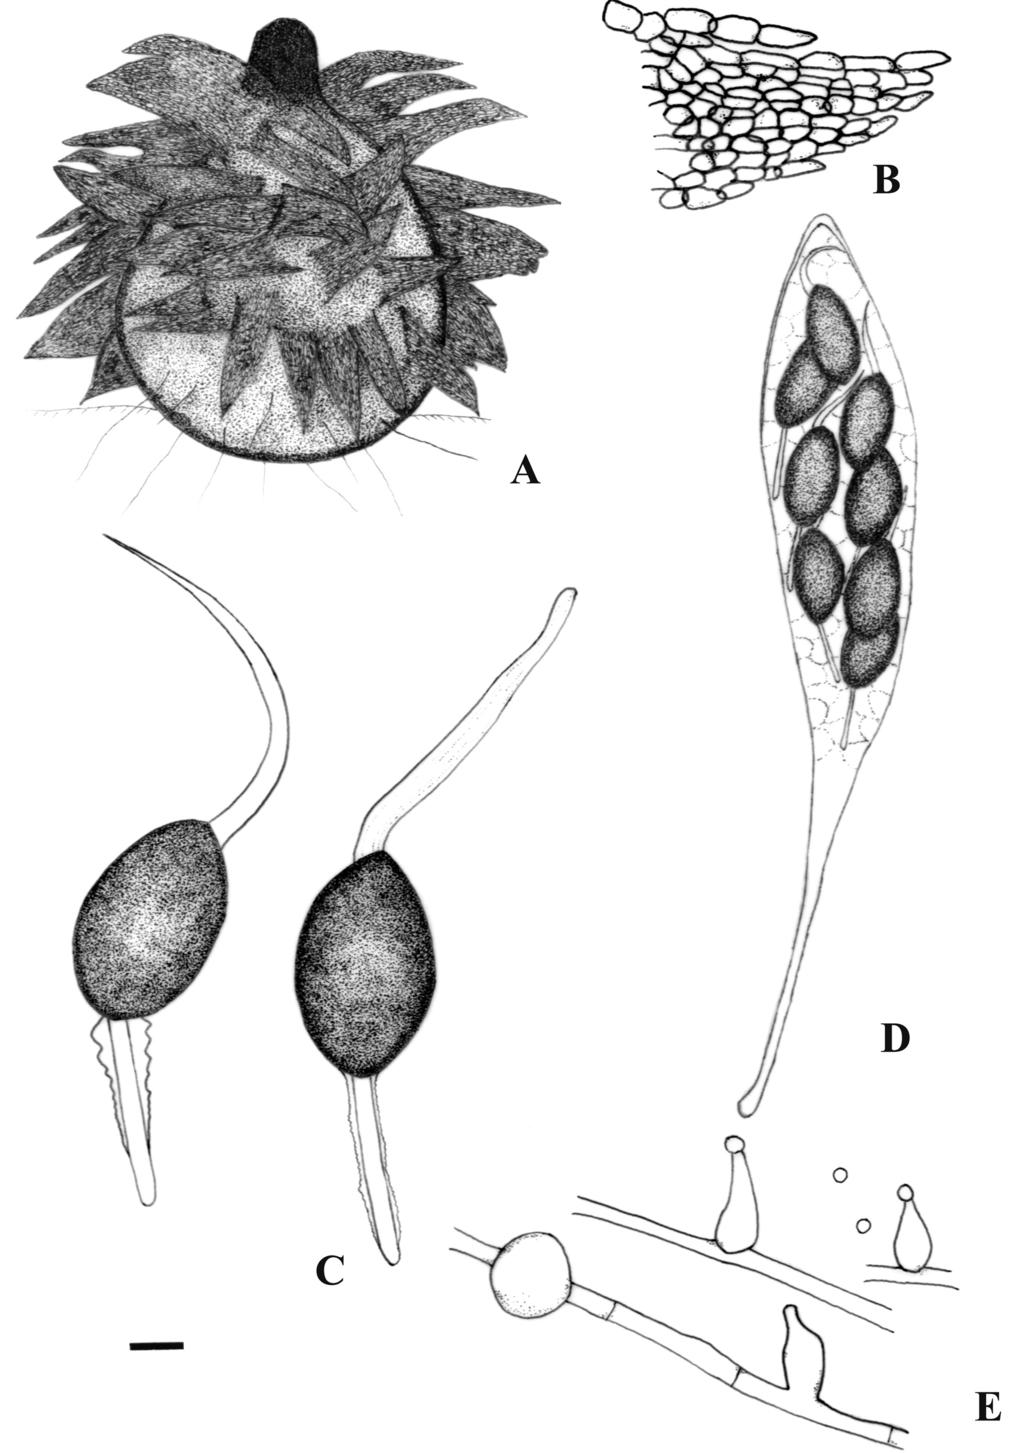 170 Botanical Bulletin of Academia Sinica, Vol. 46, 2005 Figure 1. Podospora multipilosa.